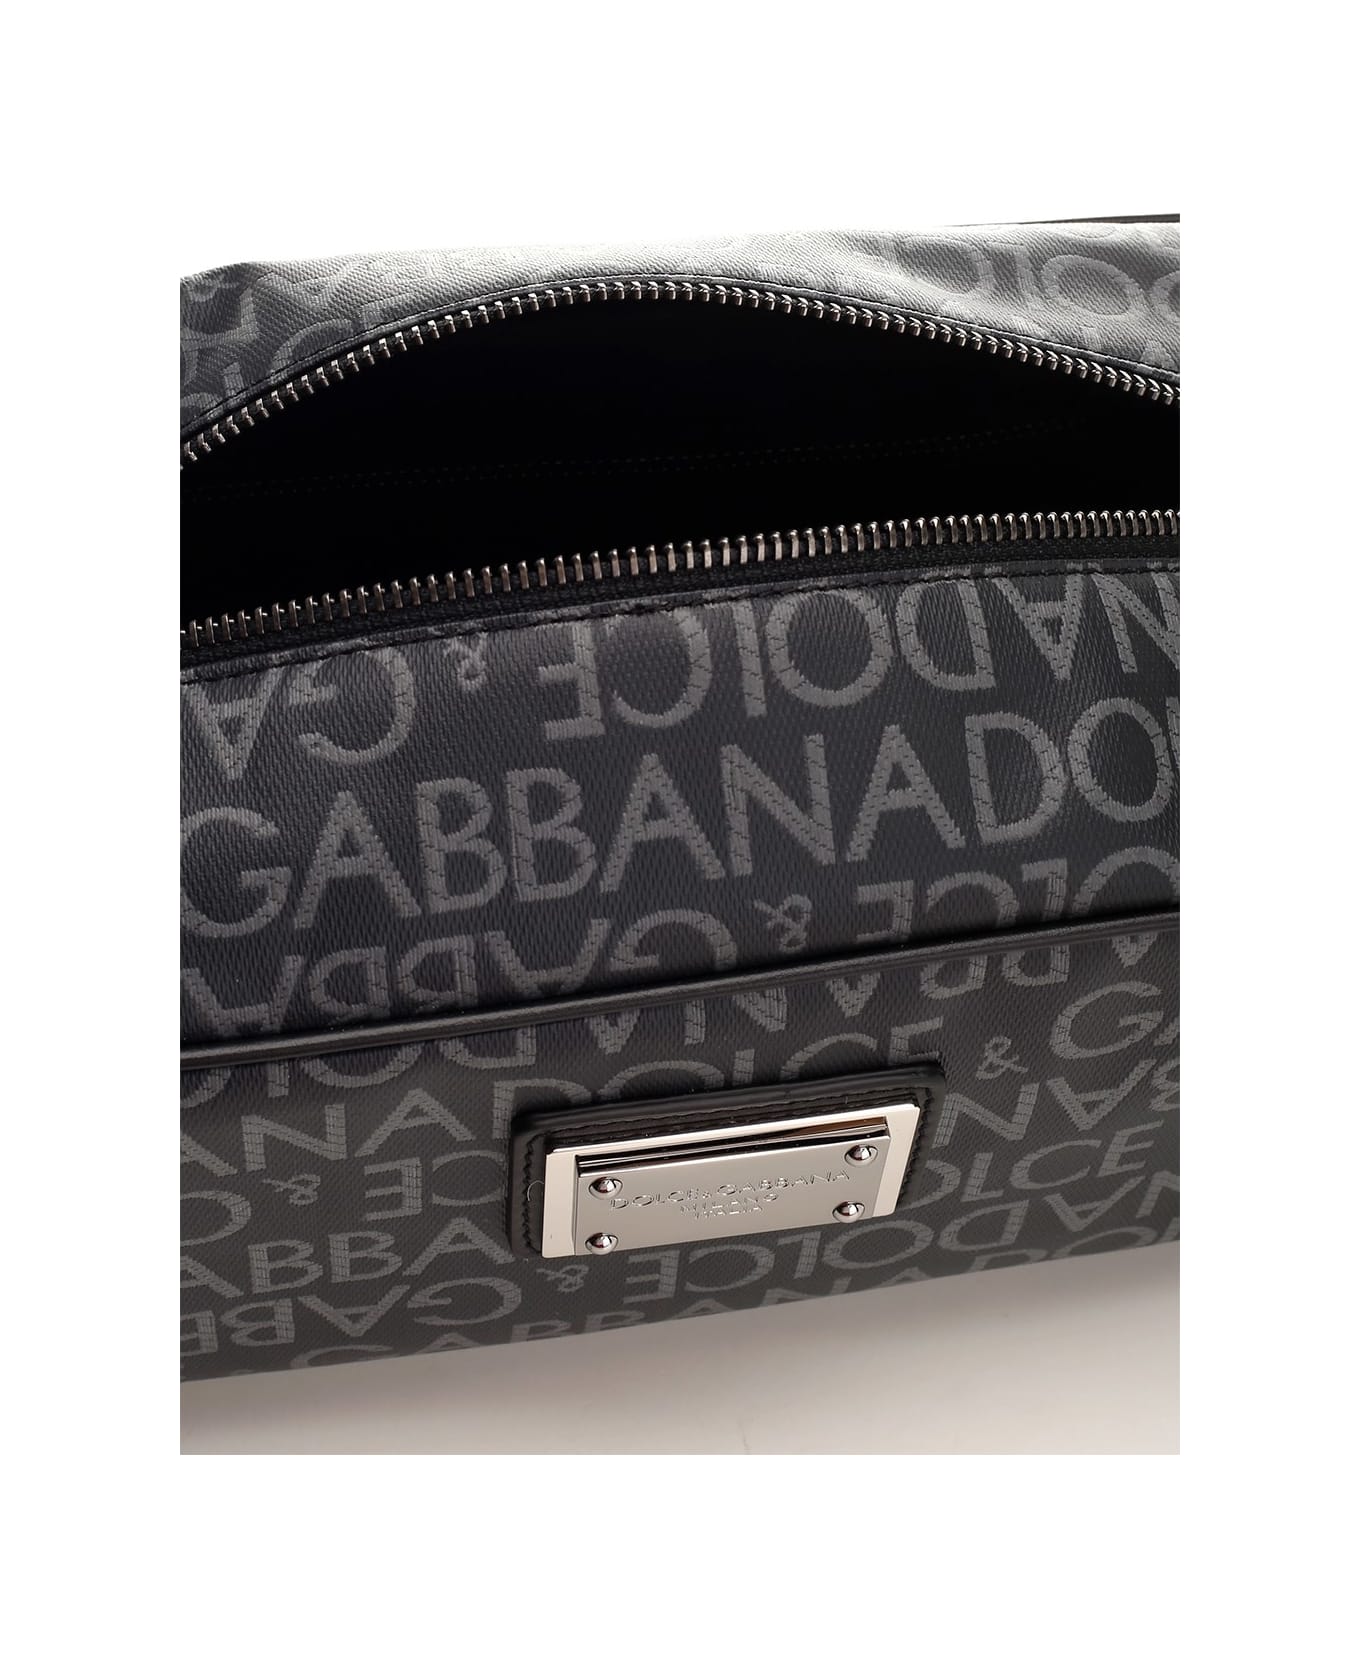 Dolce & Gabbana Logo All-over Top Zip Pouch - Black / Grey 財布